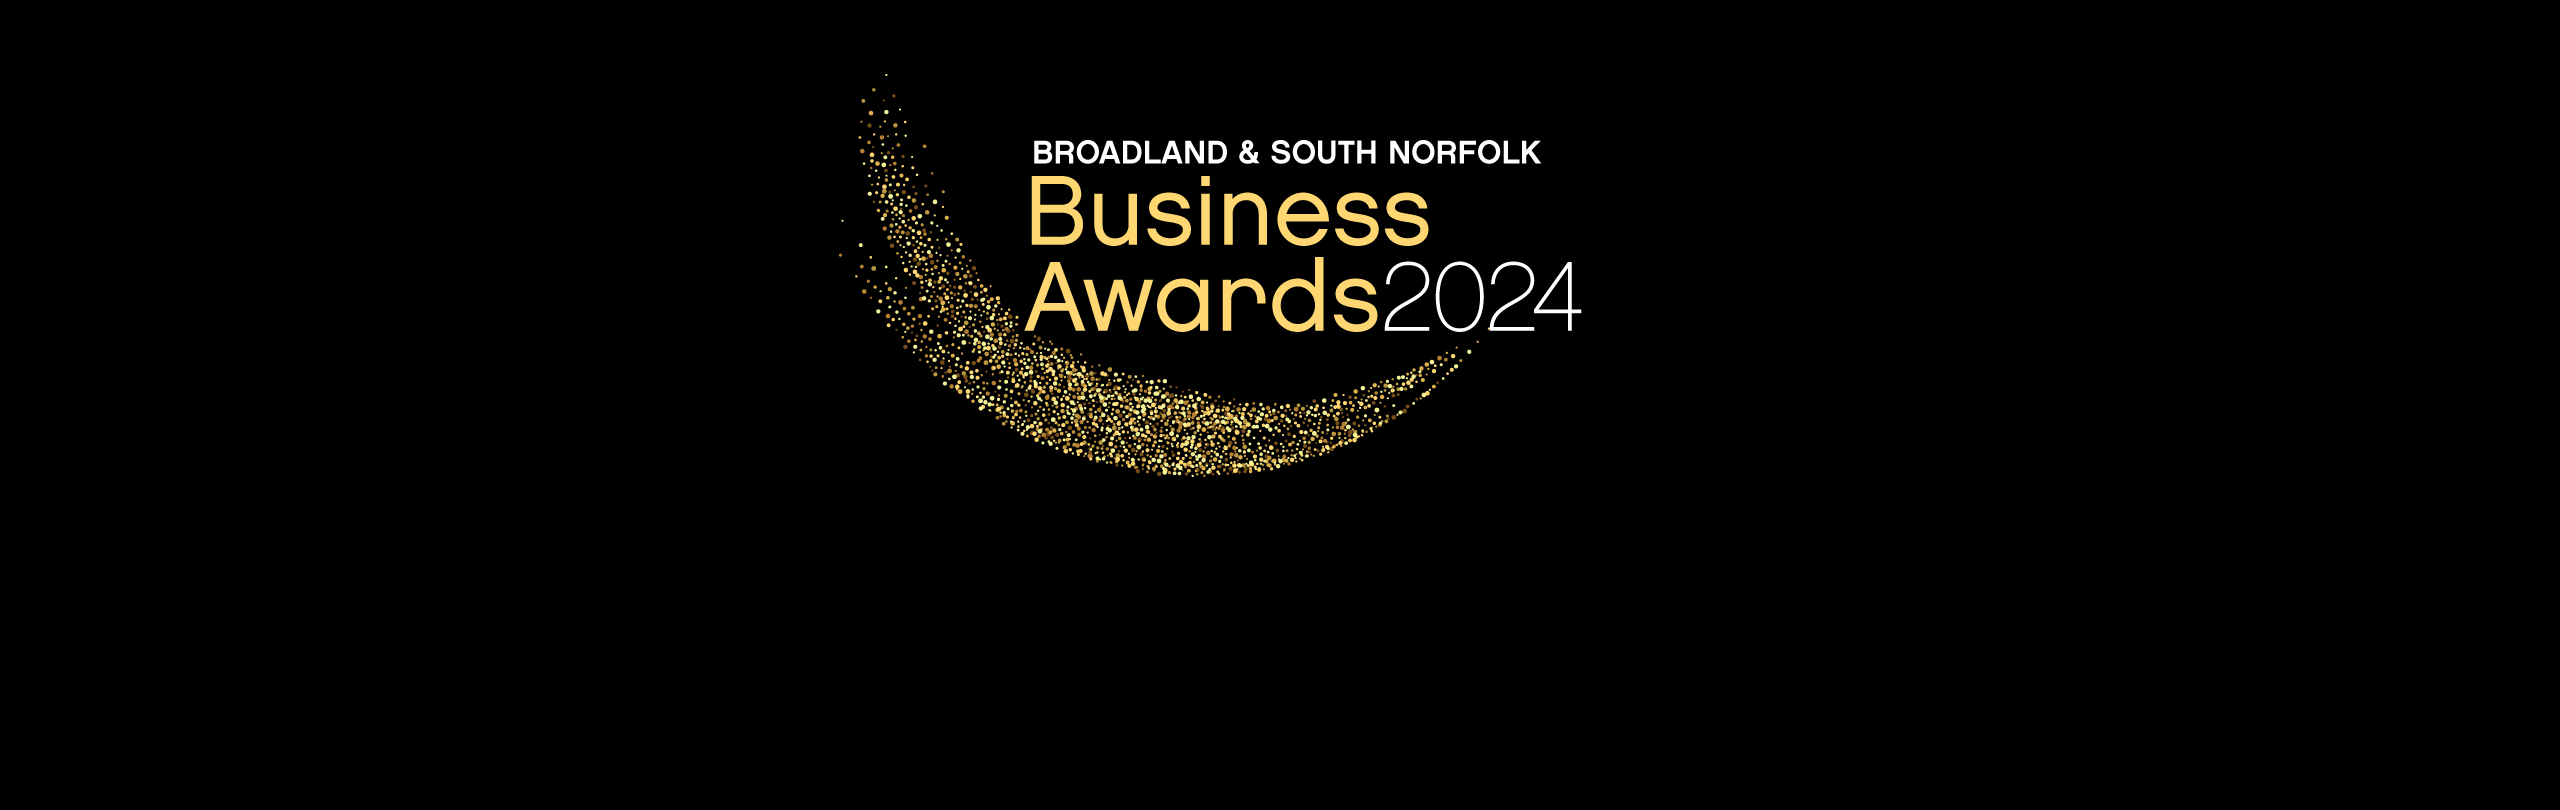 Broadland and South Norfolk Business Awards 2024